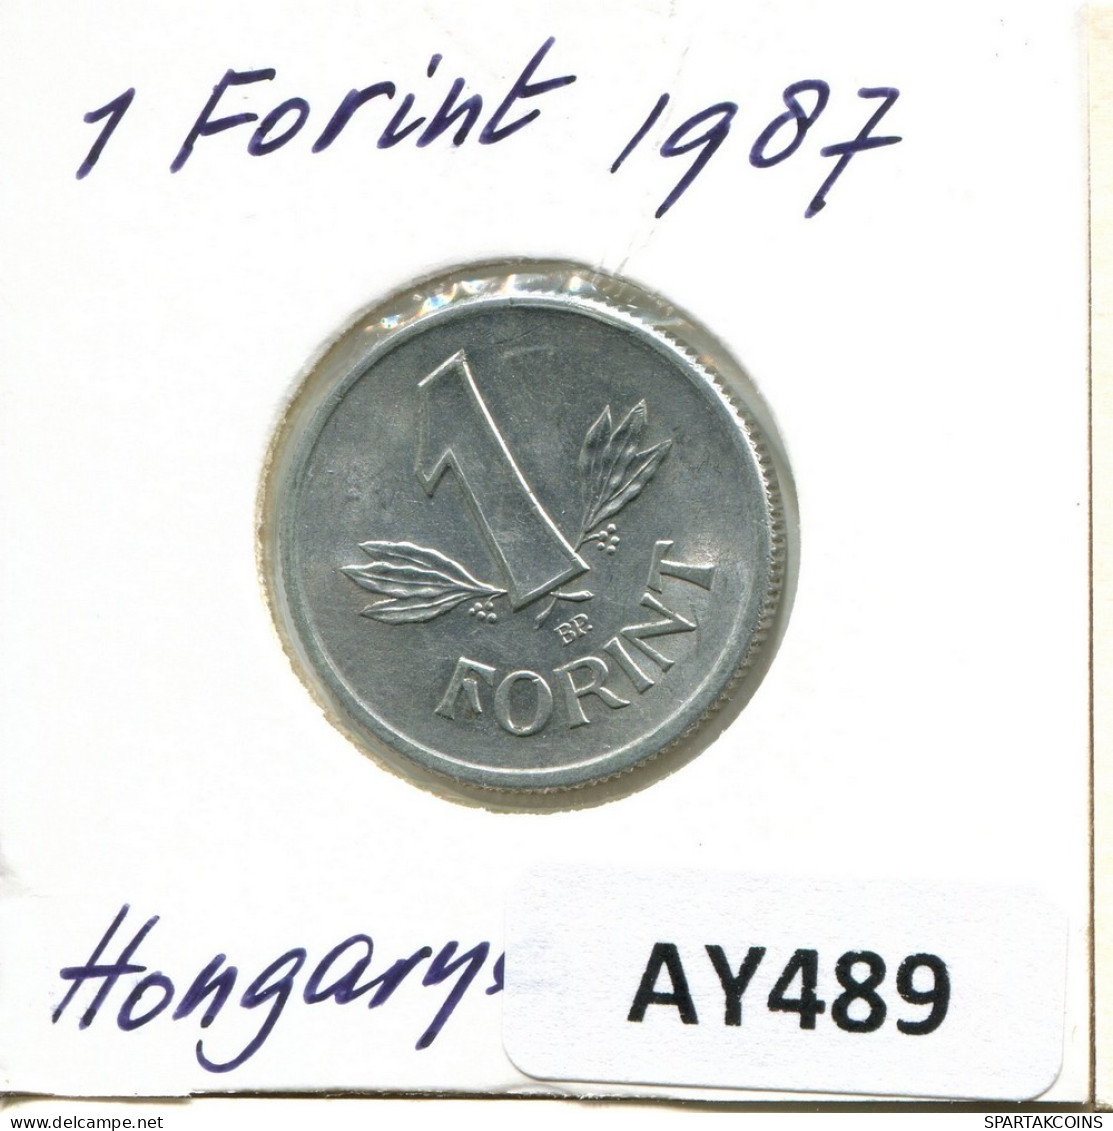 1 FORINT 1987 HONGRIE HUNGARY Pièce #AY489.F.A - Ungheria